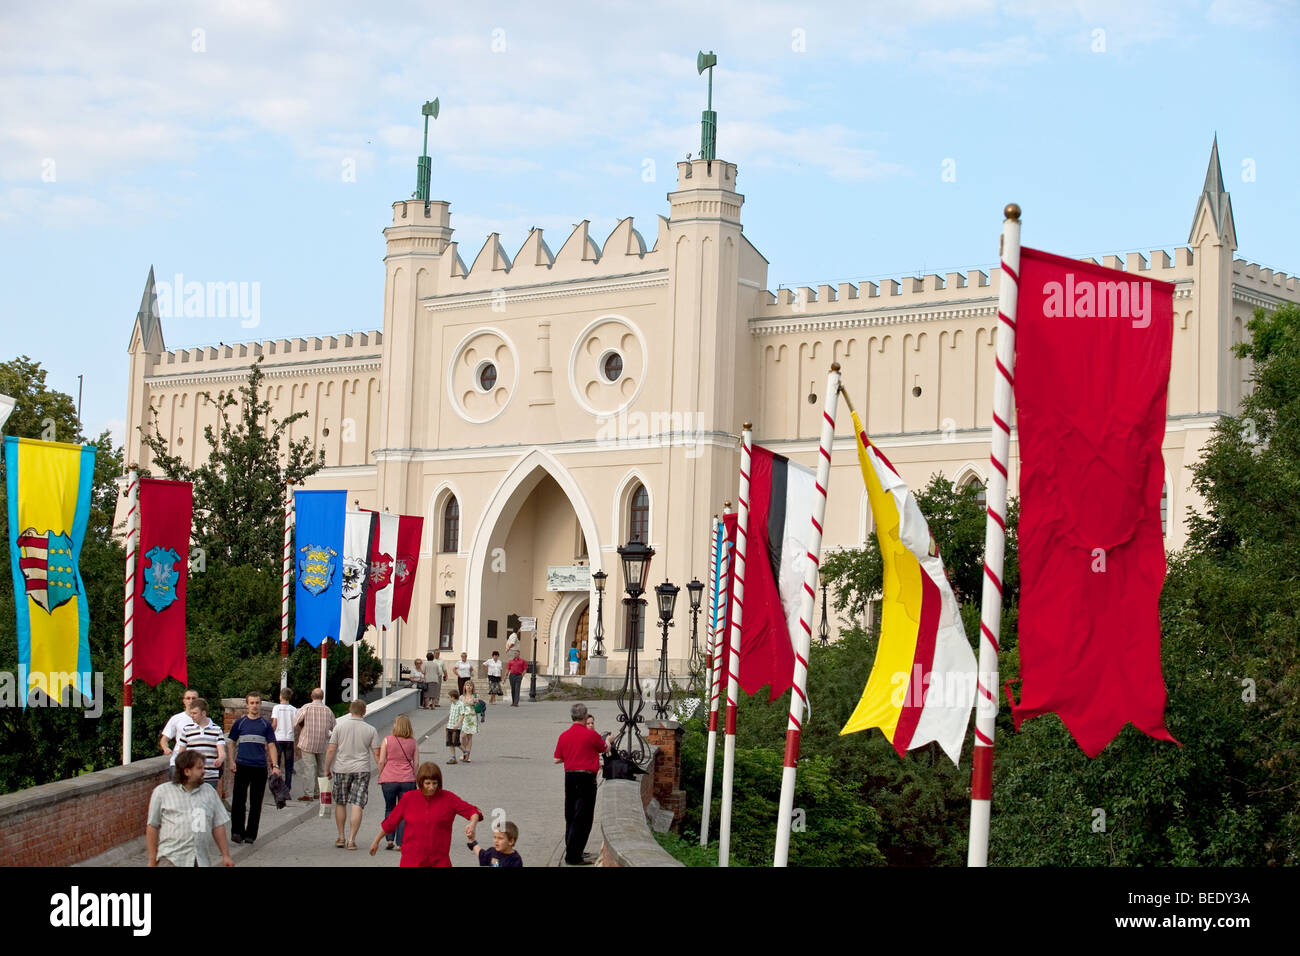 City Castle in Lublin Poland Stock Photo